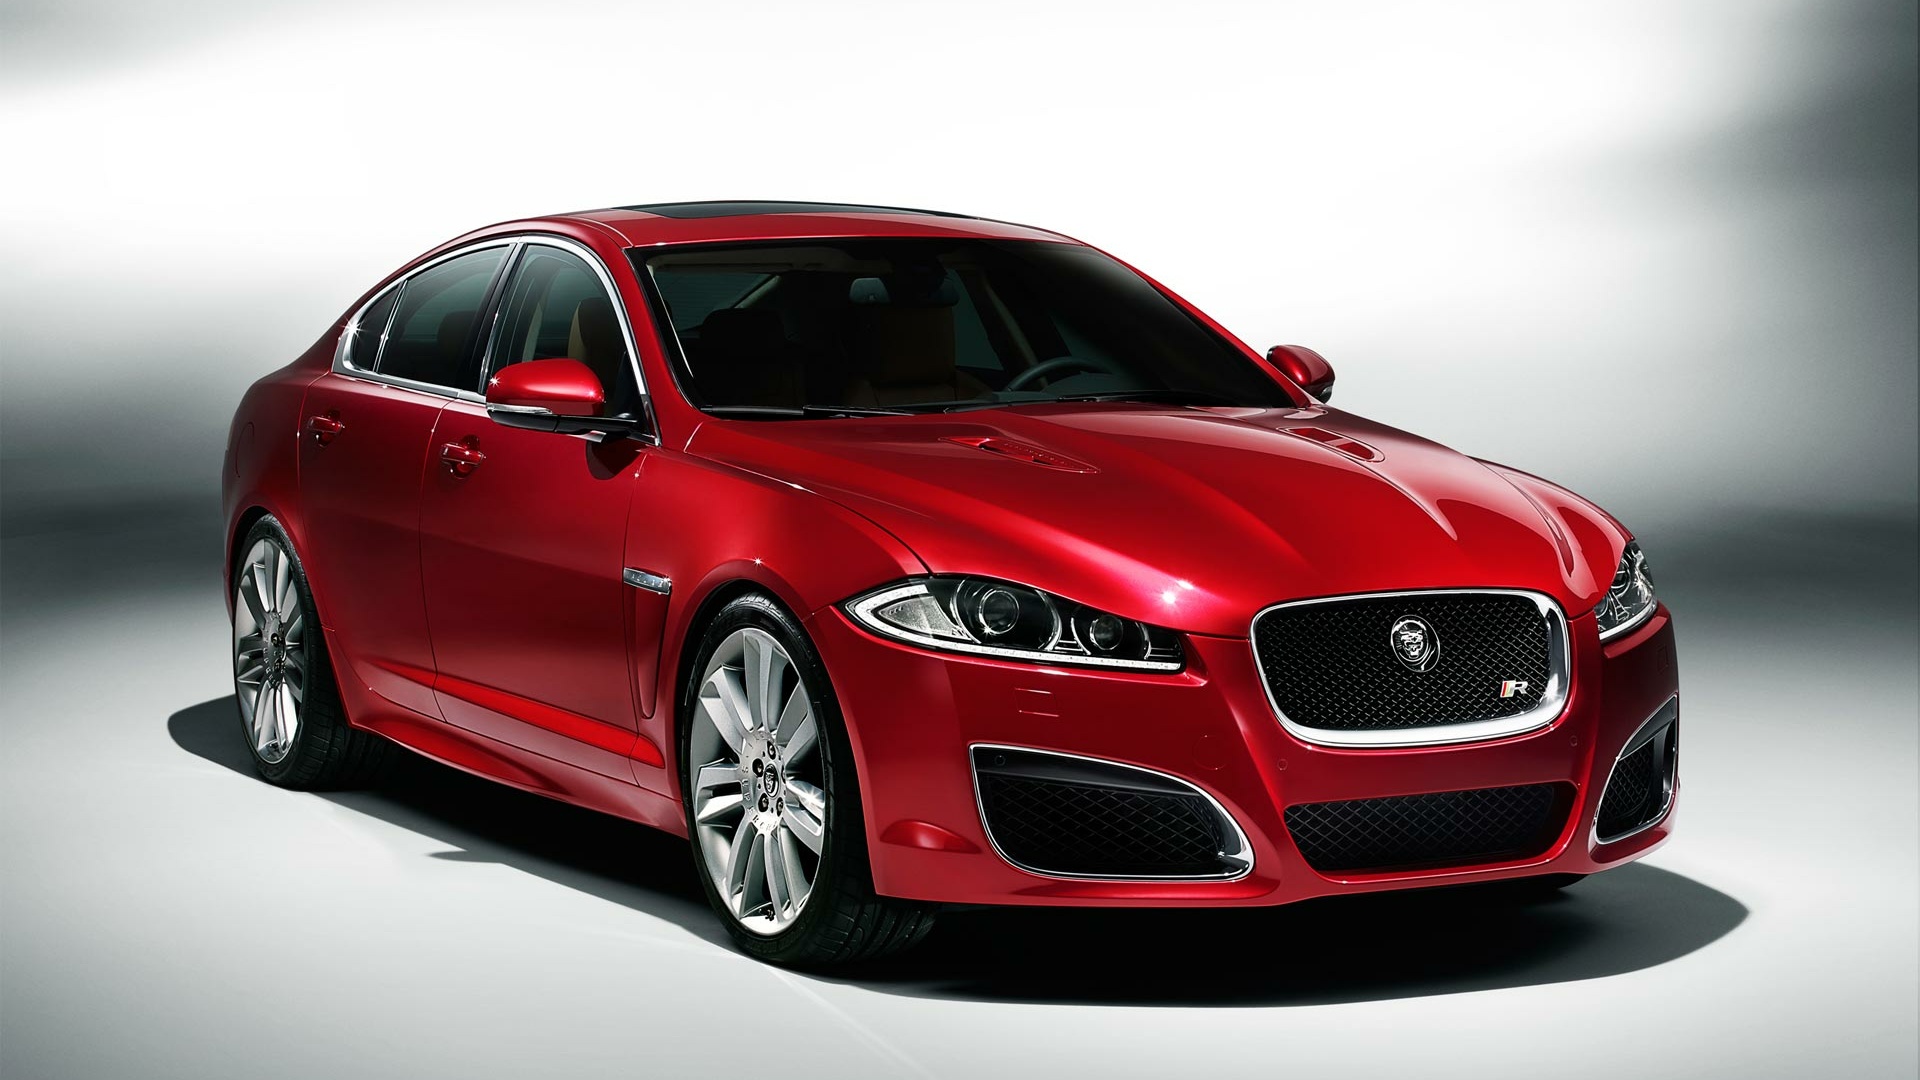 2012-Jaguar-Xf-Facelift